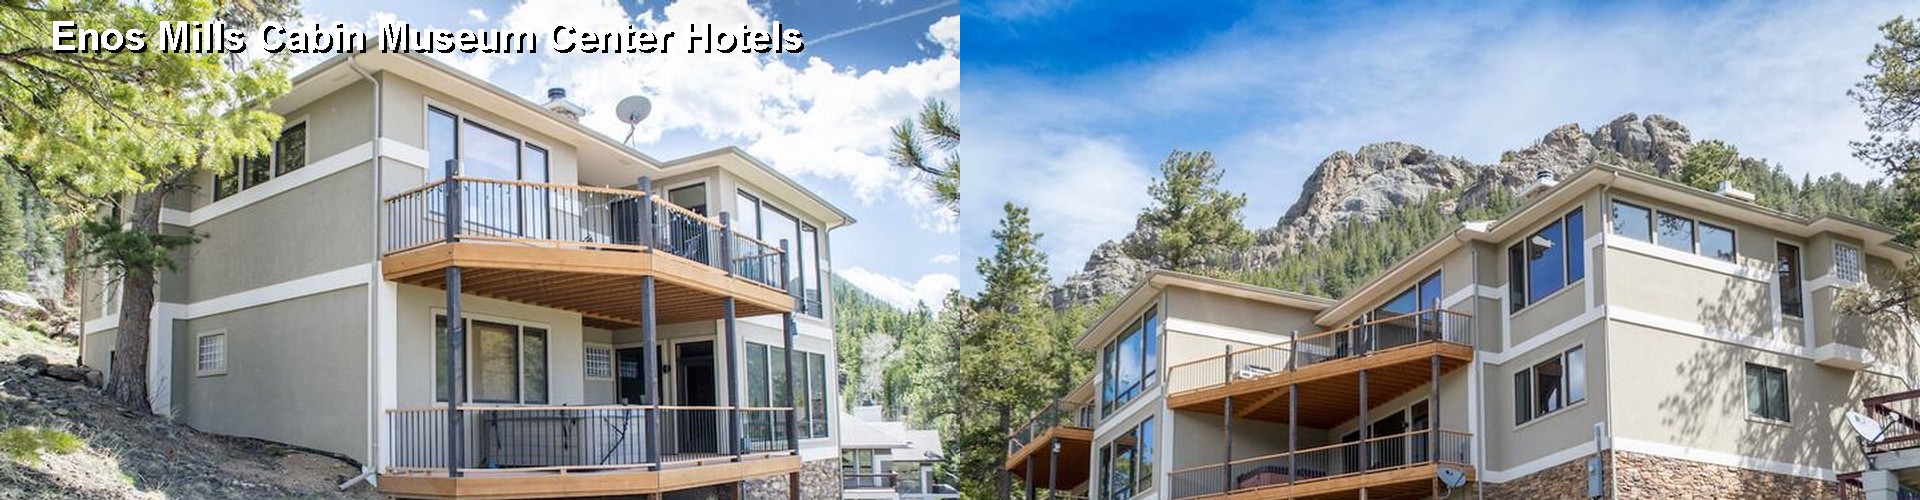 5 Best Hotels near Enos Mills Cabin Museum Center